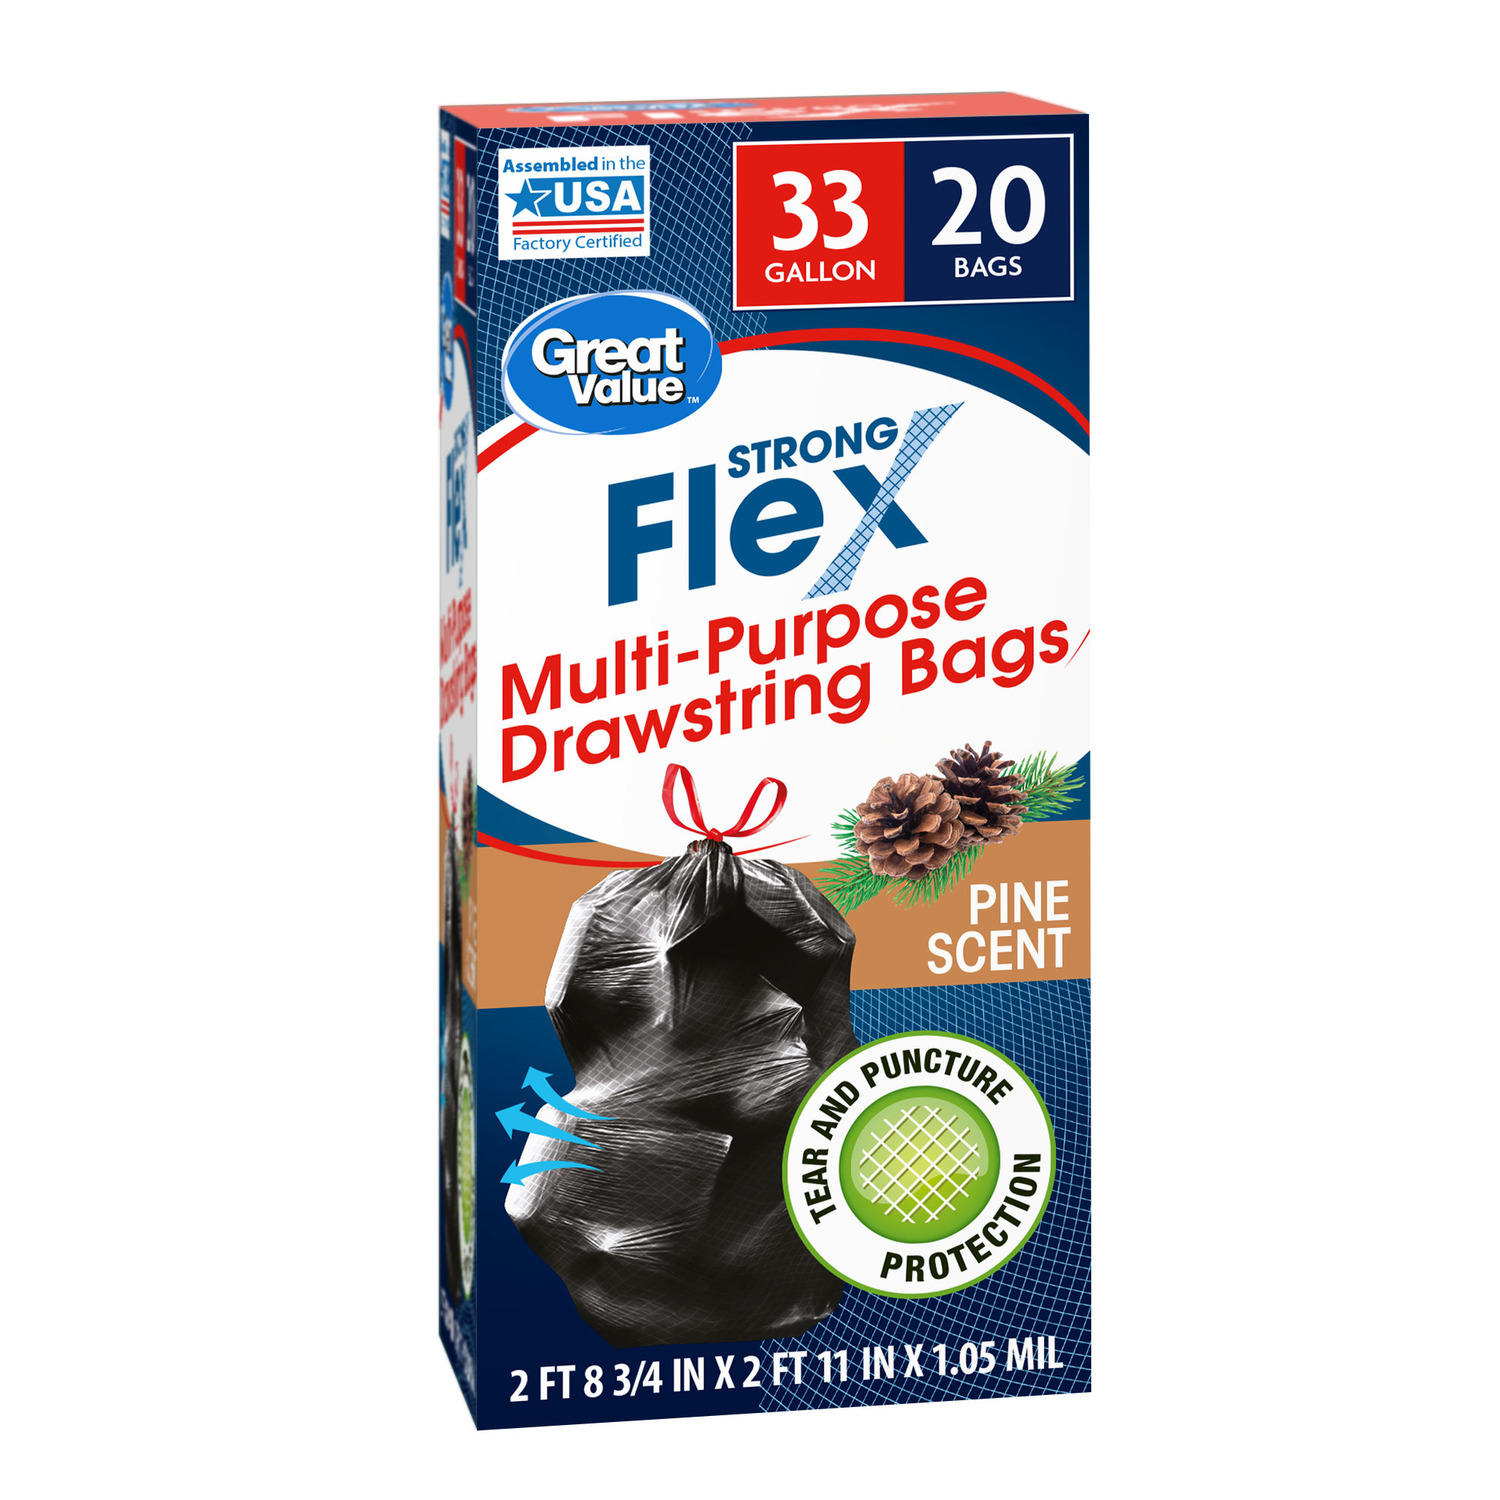 Great Value Strong Flex Multi-Purpose Trash Bags, 33 Gallon, 20 Bags (Pine Scent